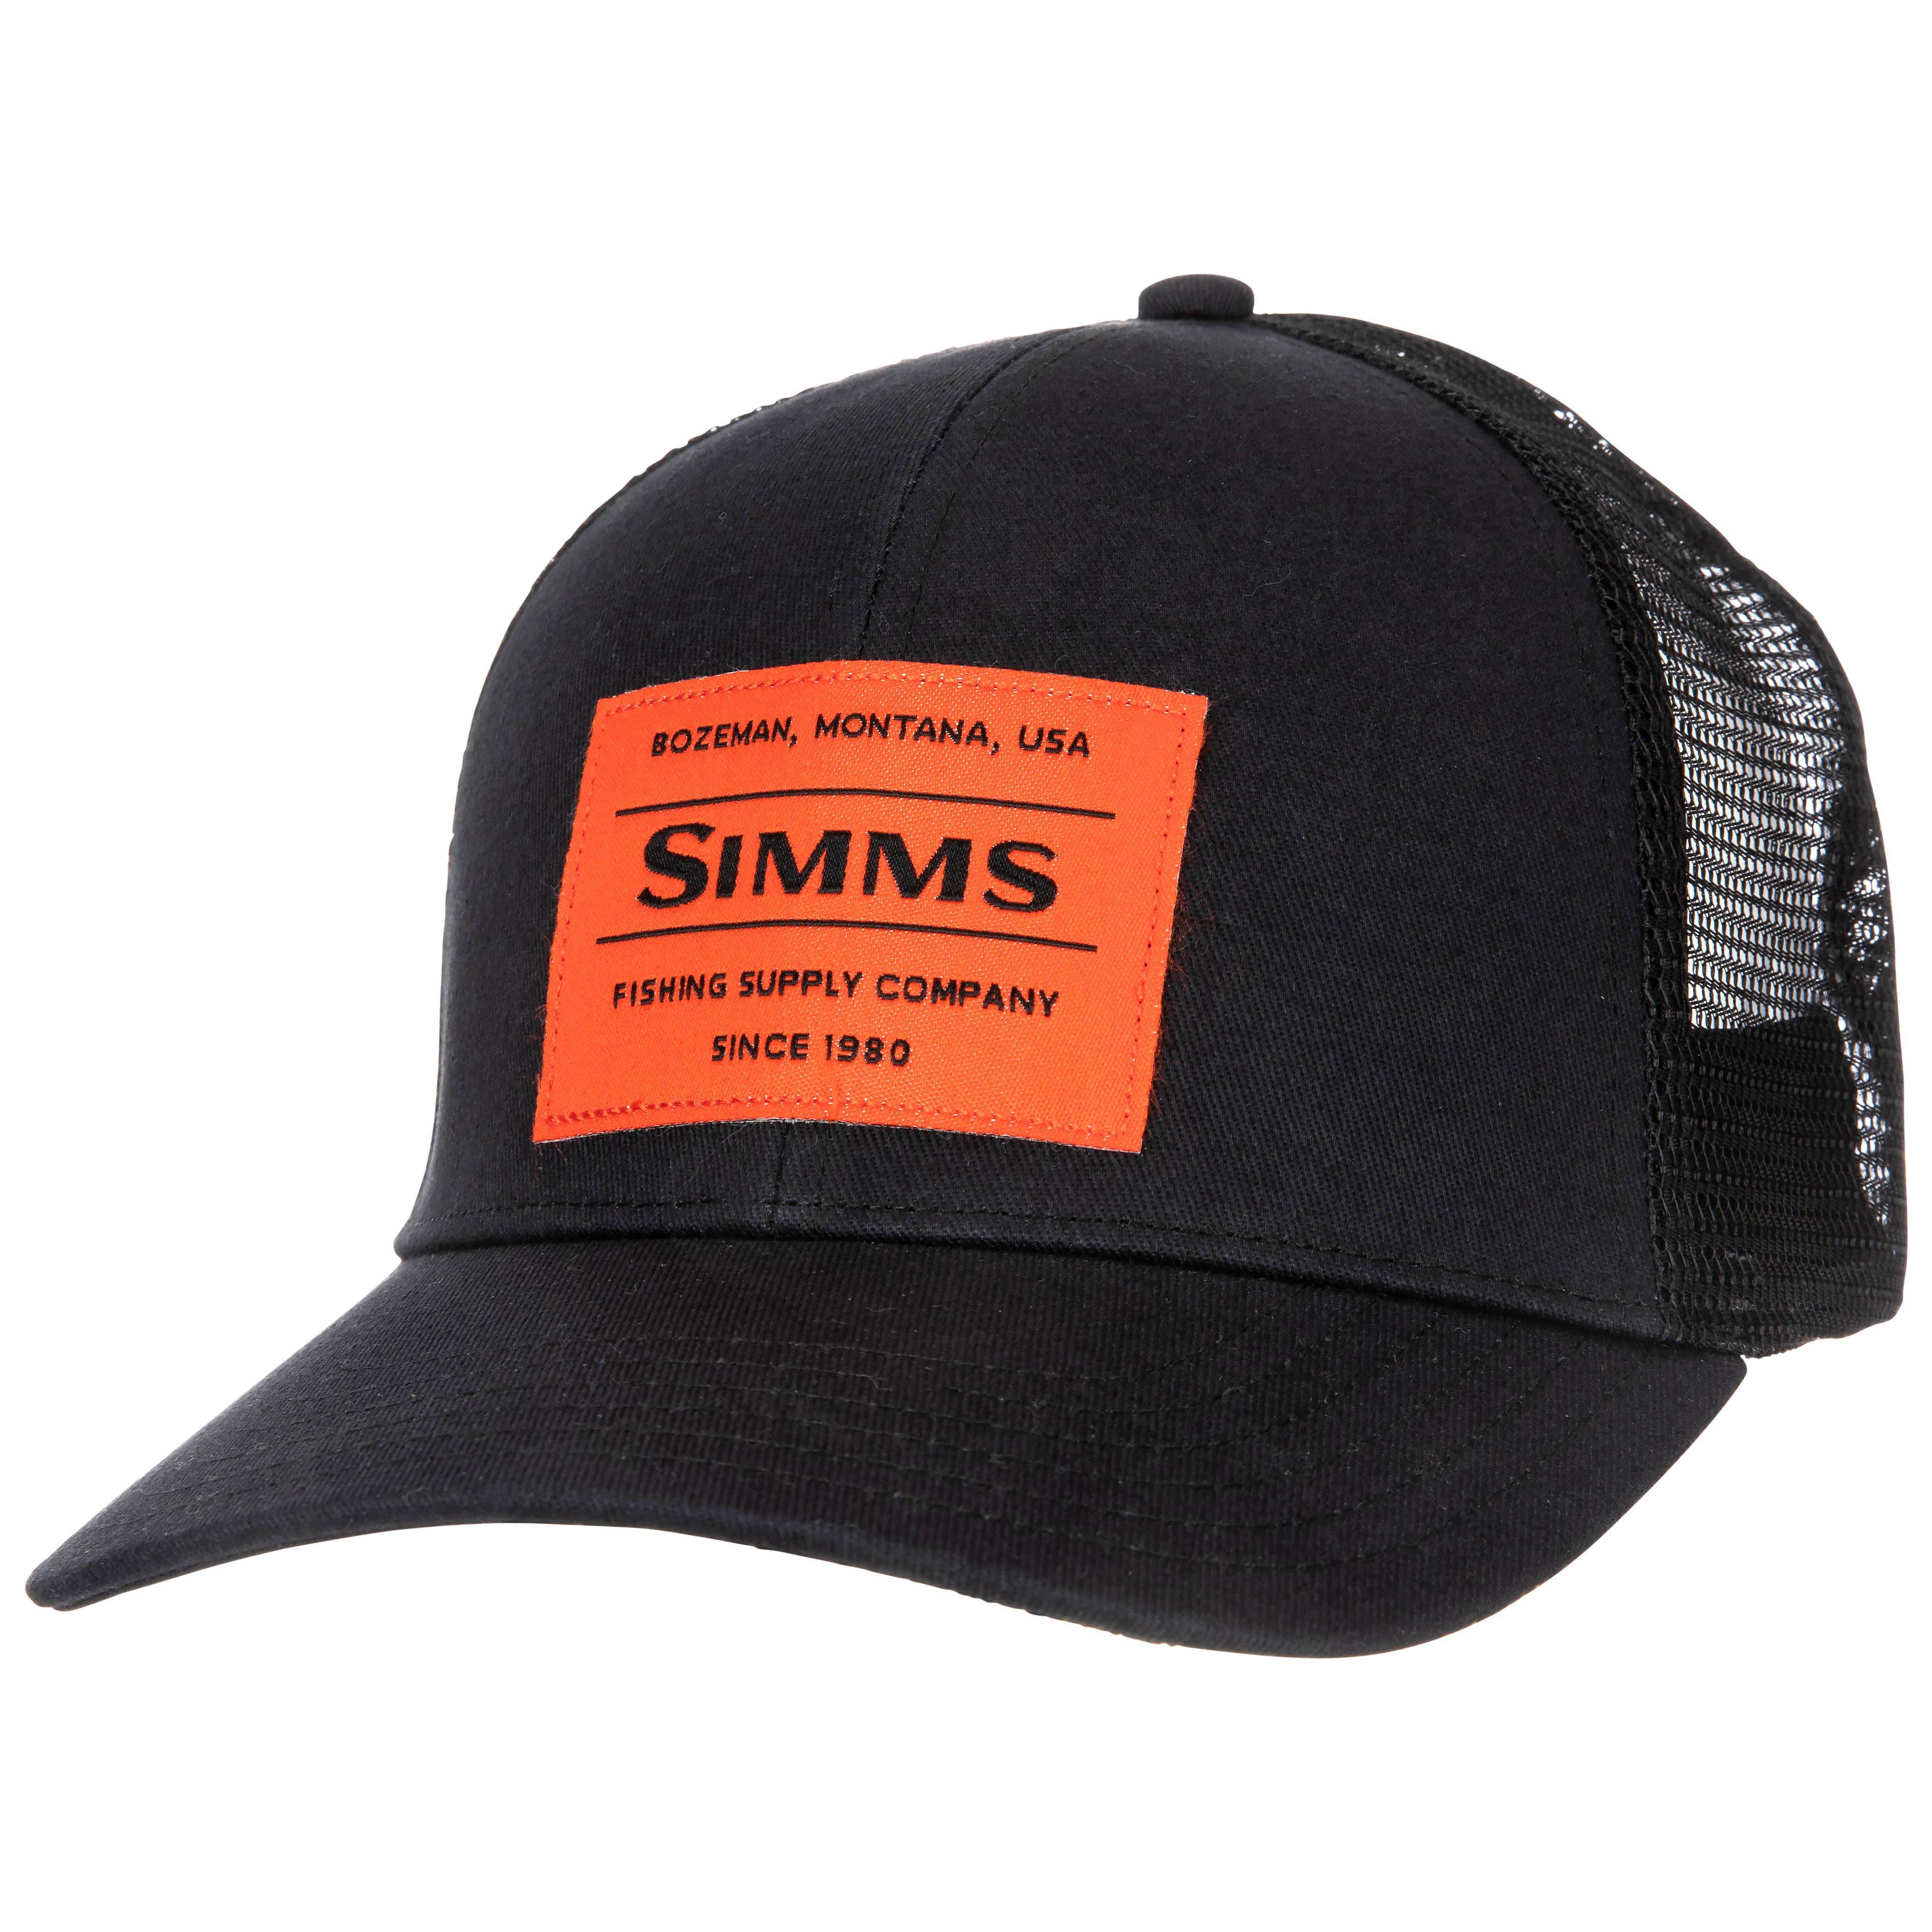 Simms Original Patch Trucker - Black